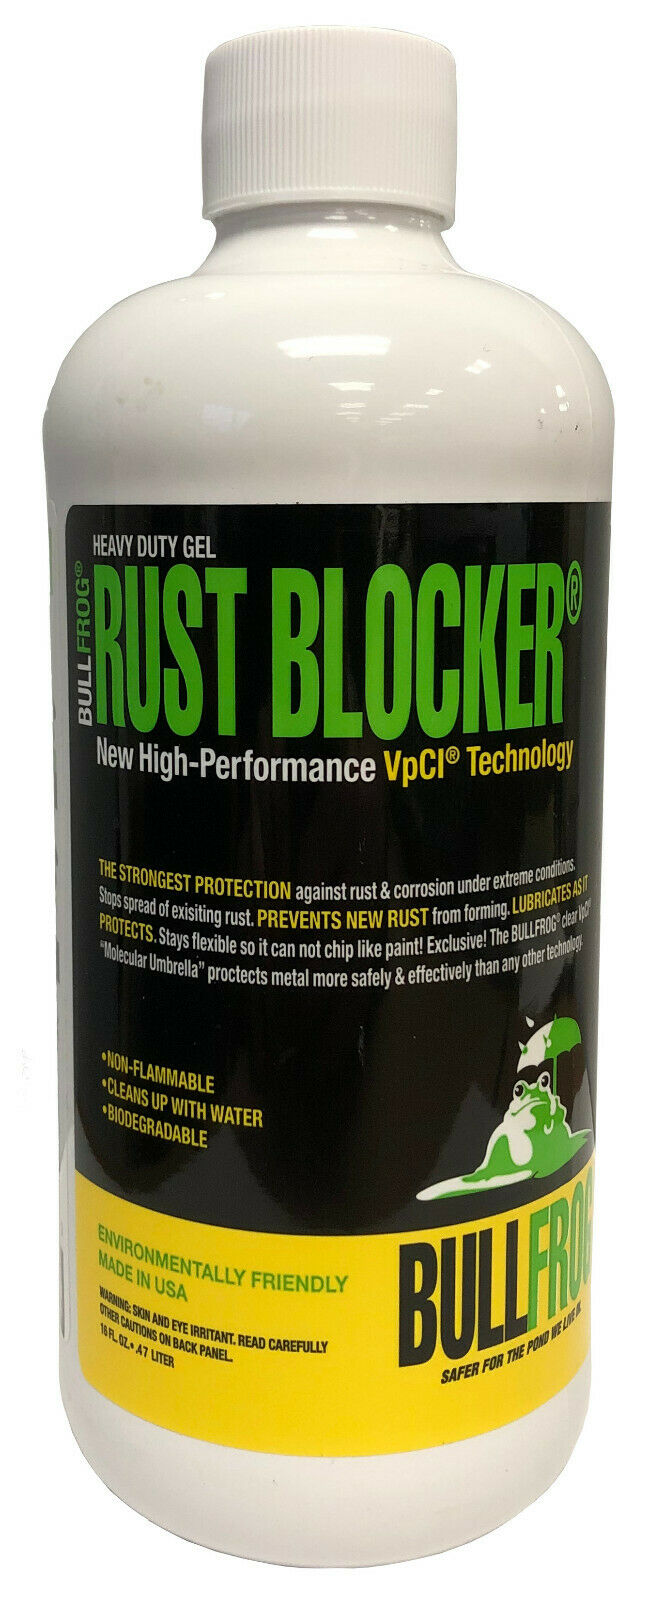 Bull Frog, BullFrog 93896 Rust Blocker Heavy Duty Gel Protects Against Formation of Rust, 16oz